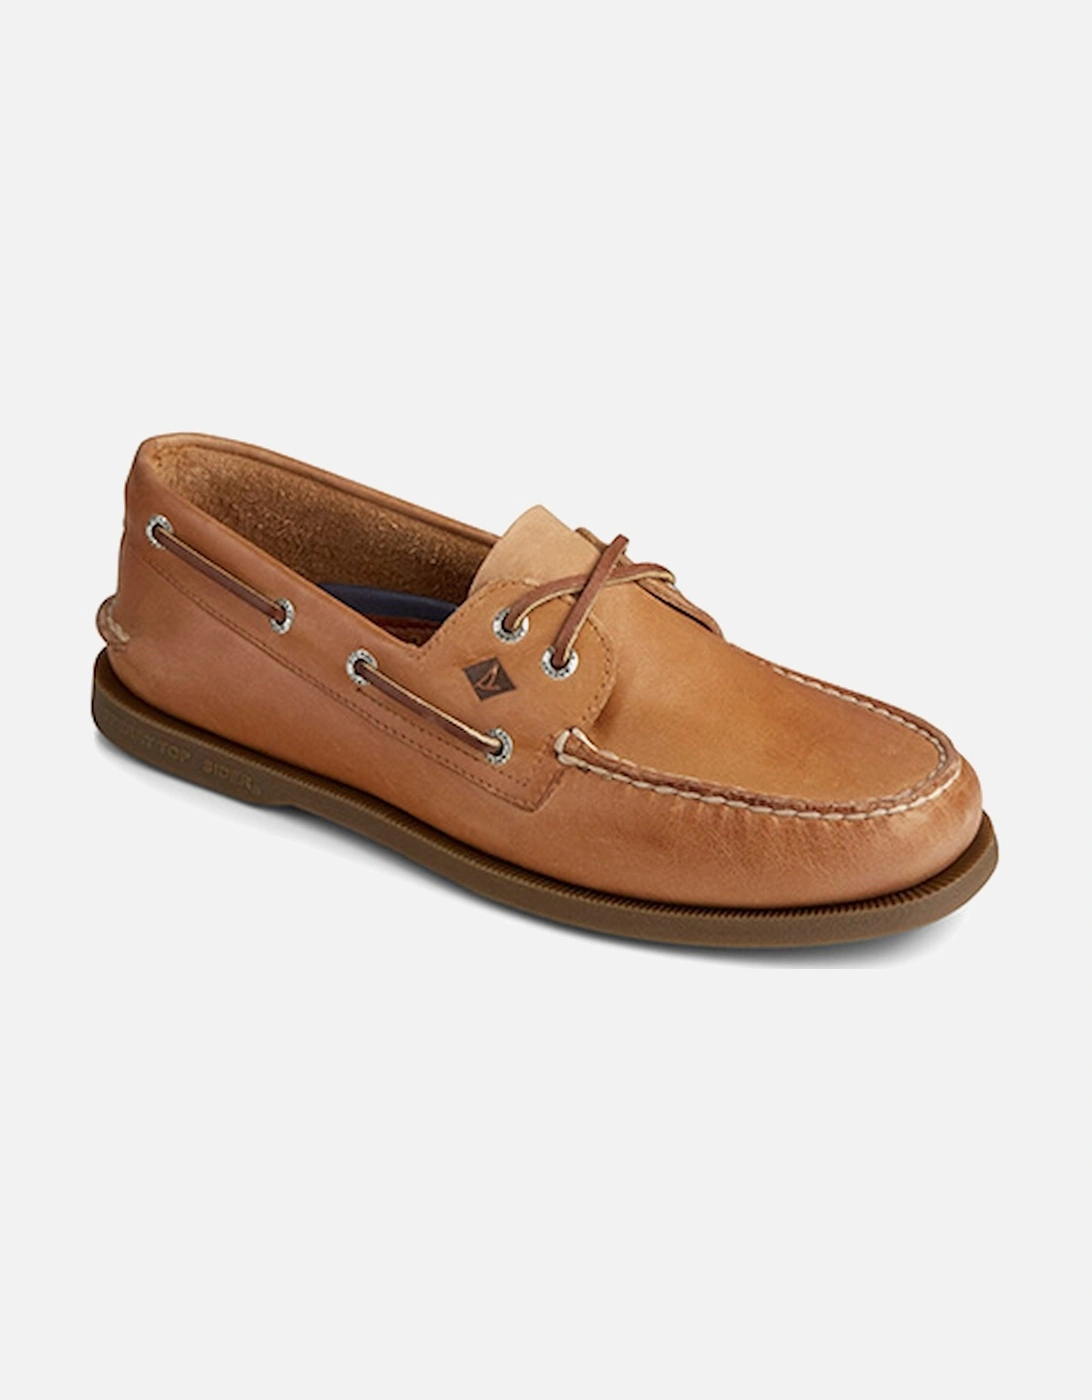 Sperry Men's Authentic Original Leather Boat Shoe Tan DFS, 7 of 6